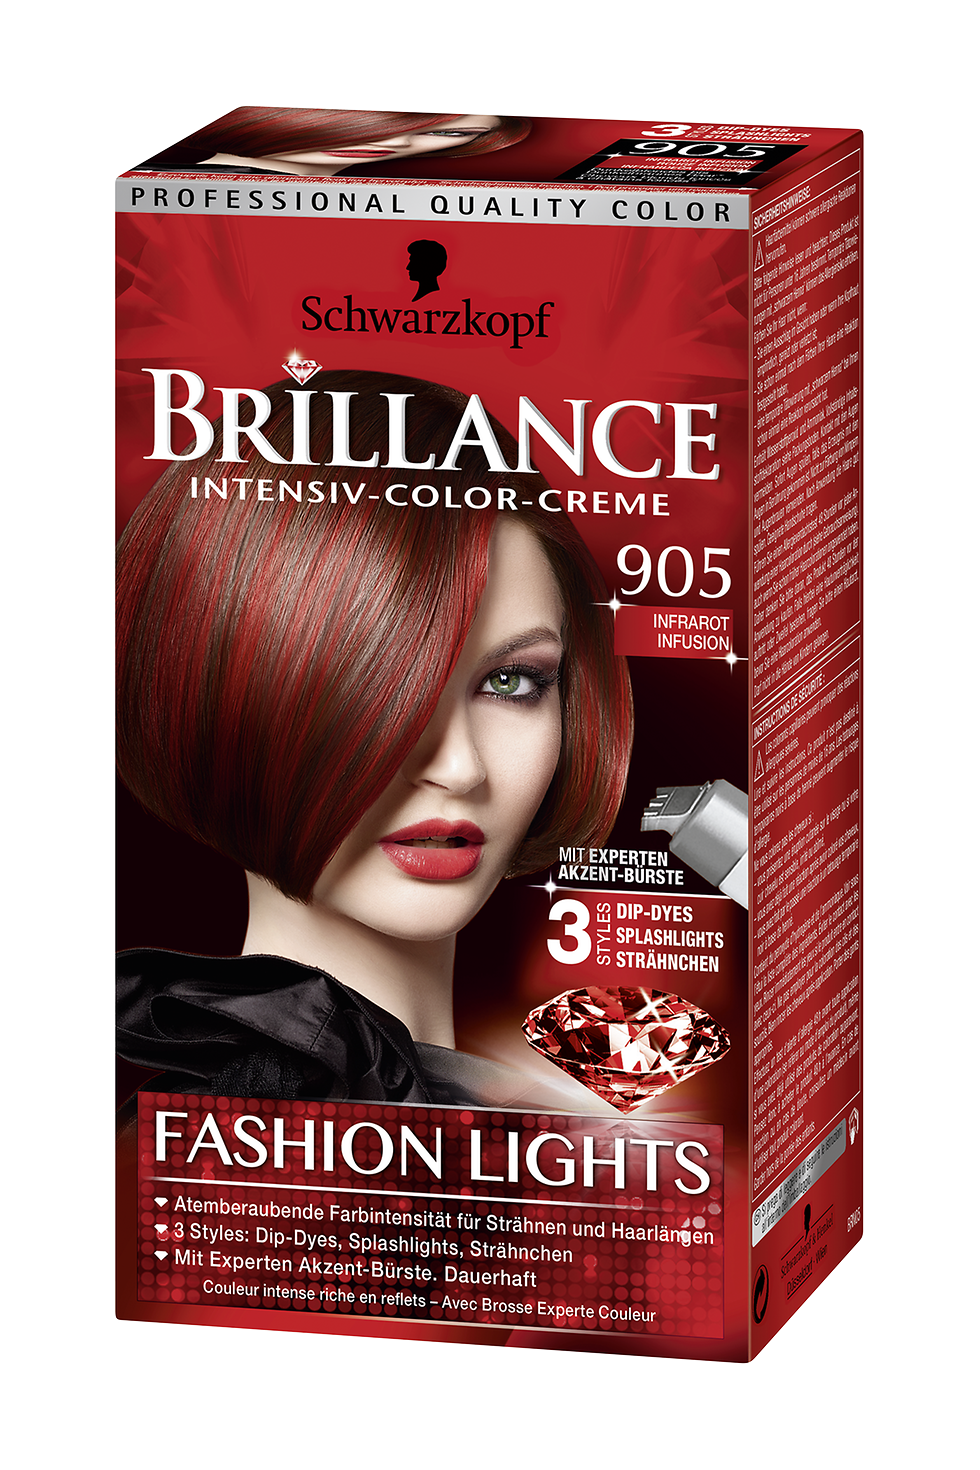 Brillance Fashion Lights Infrarot Infusion